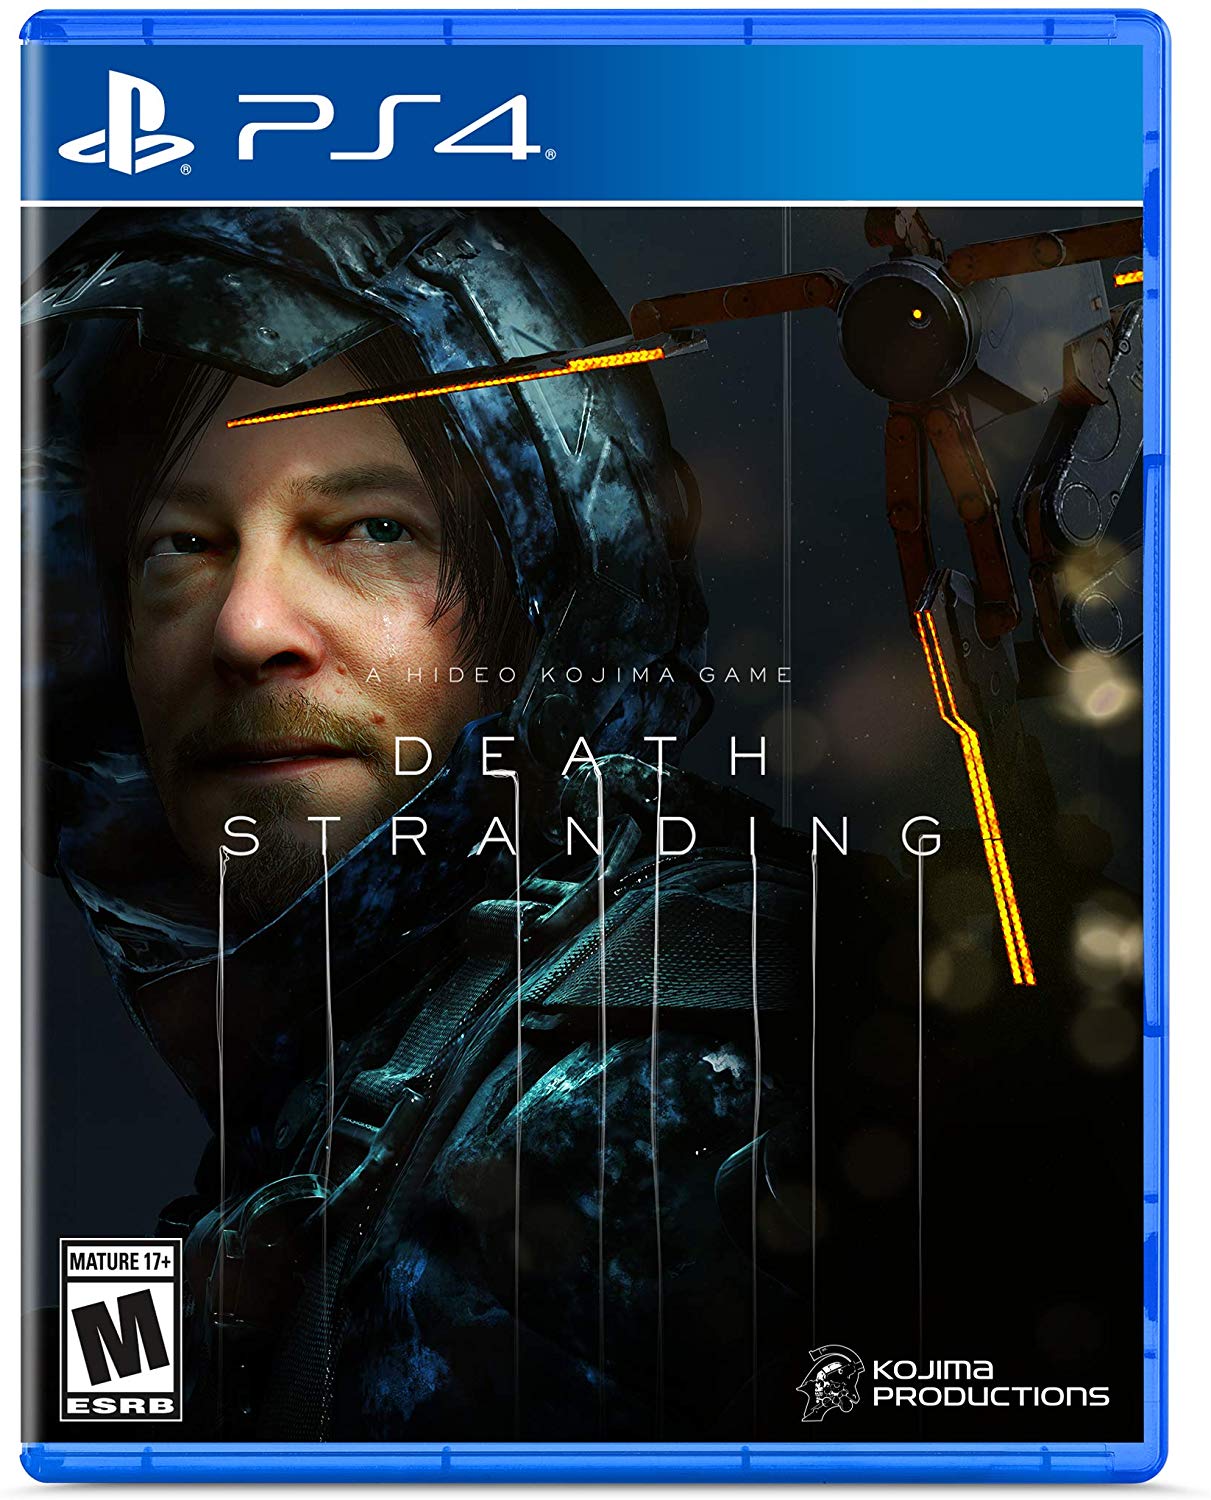 Death Stranding PS4 box art